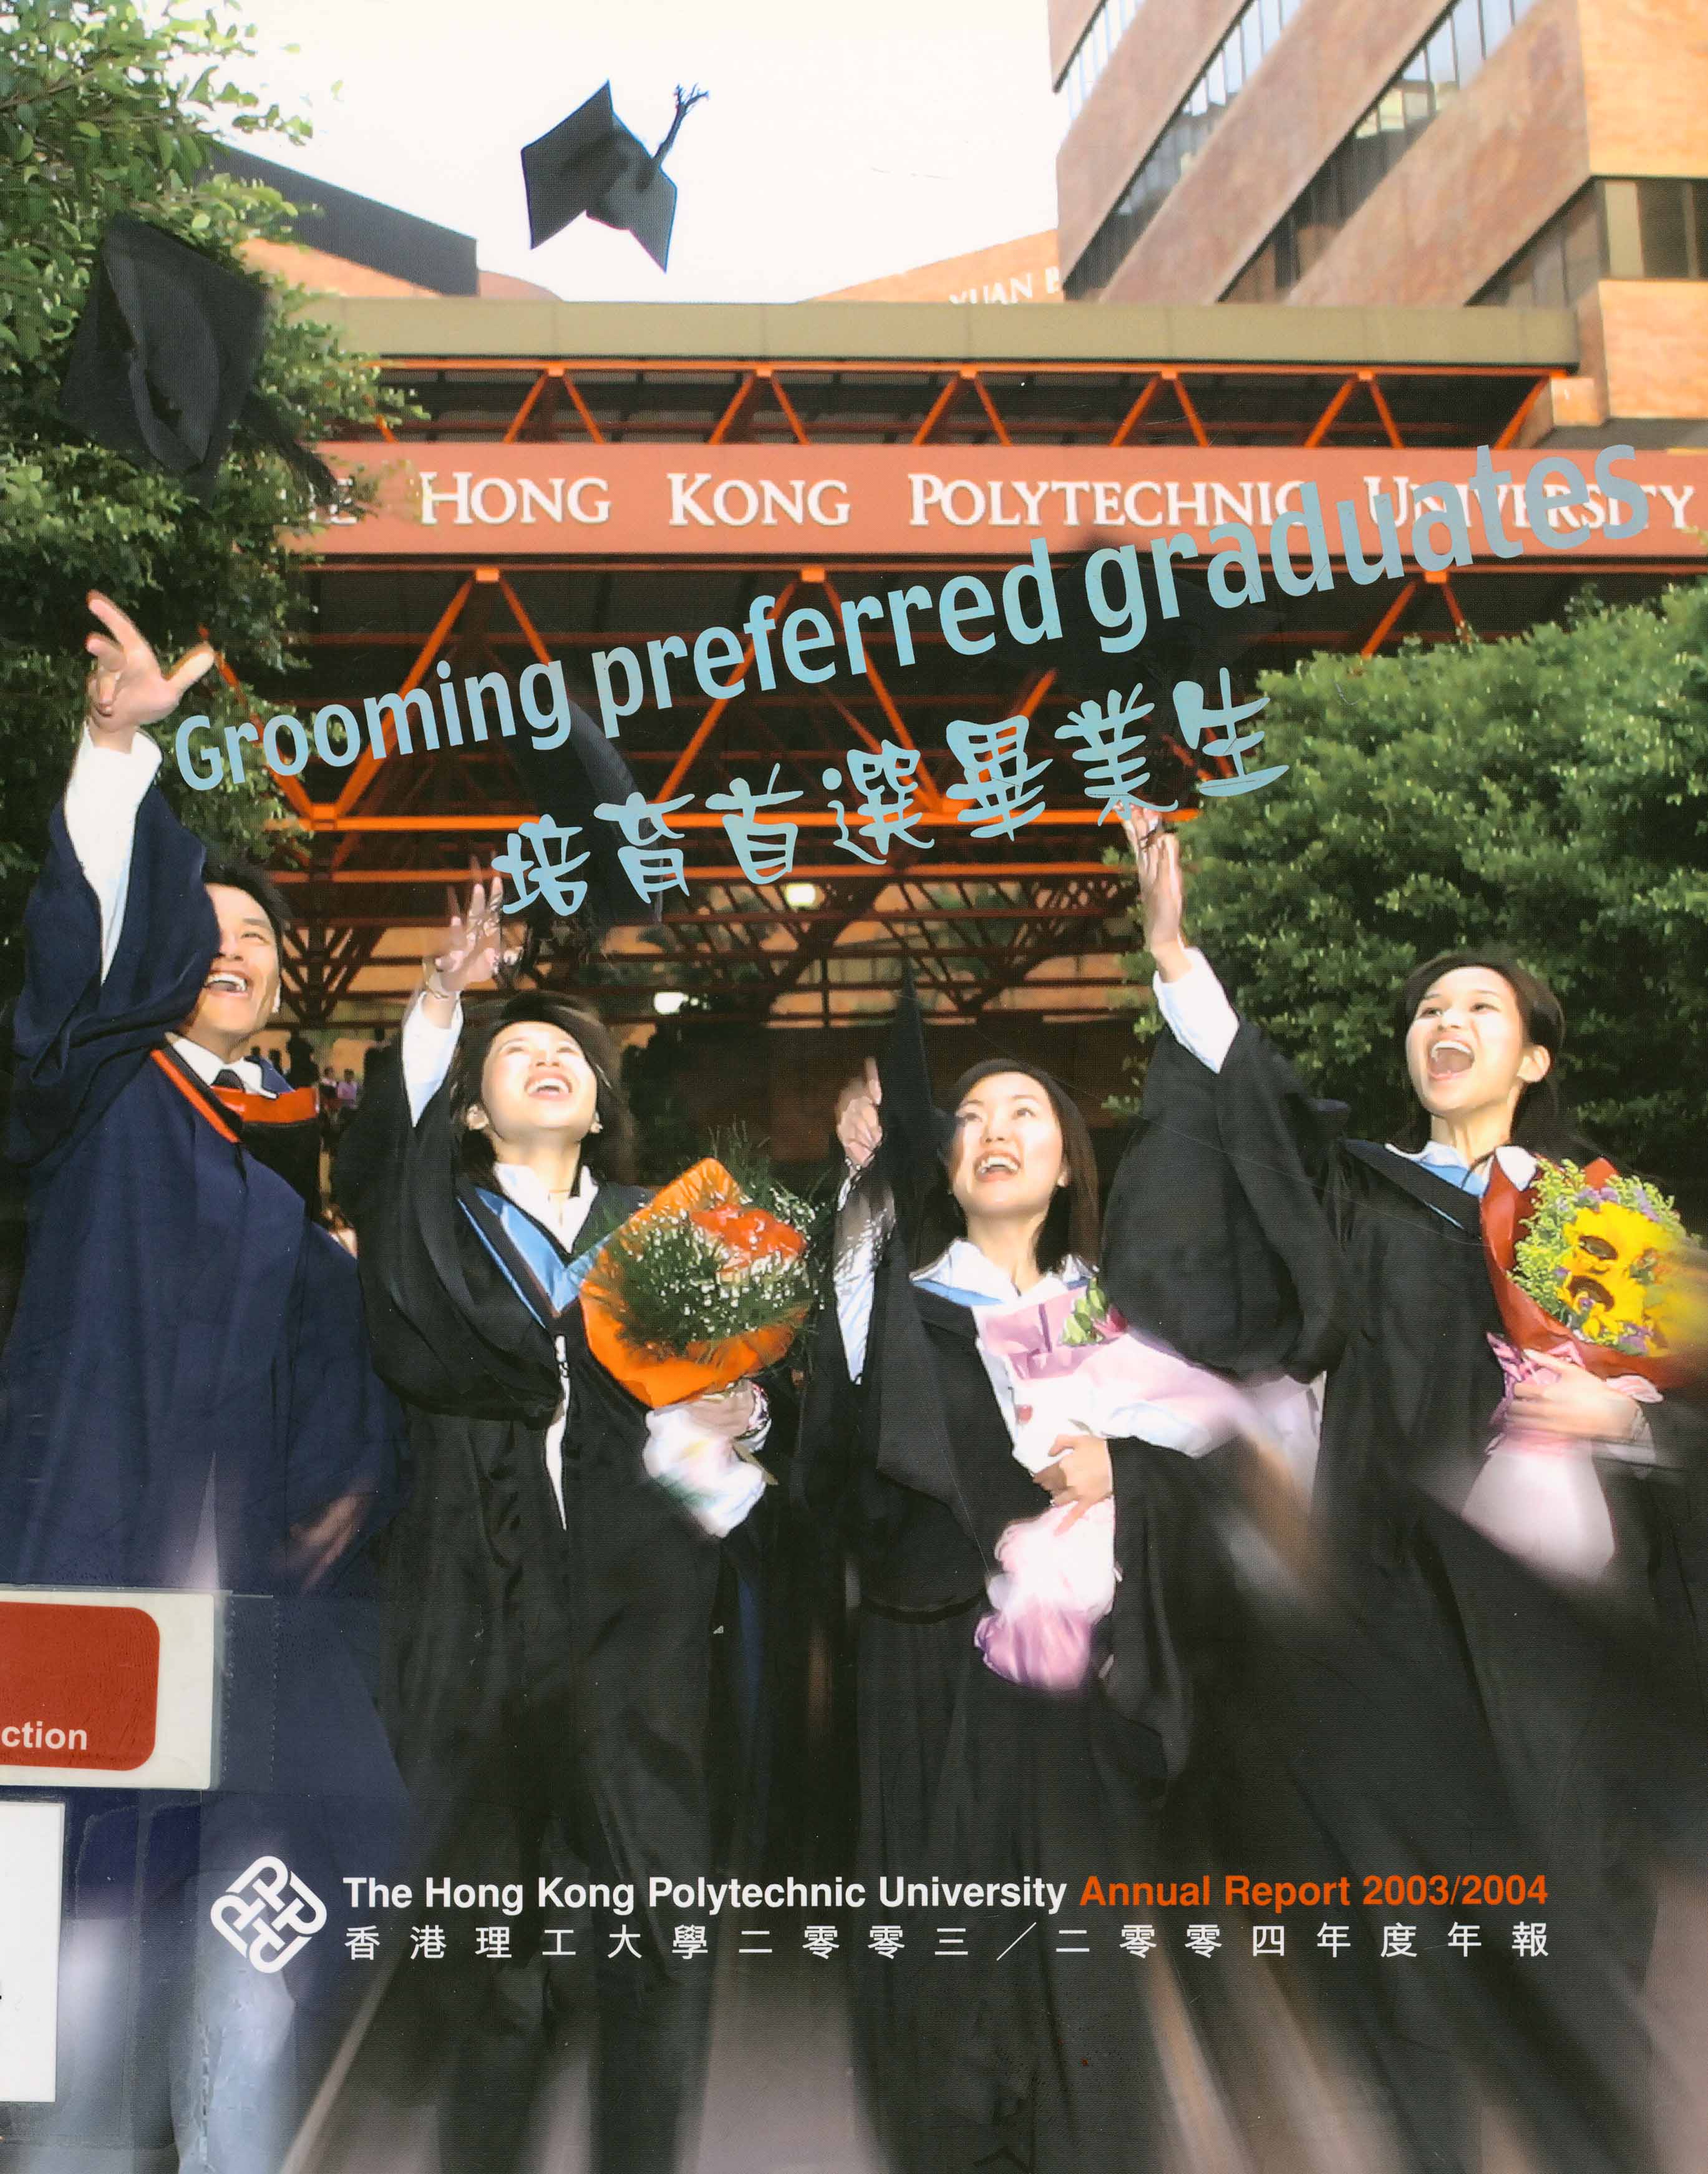 The Hong Kong Polytechnic University Annual Report 2003/04